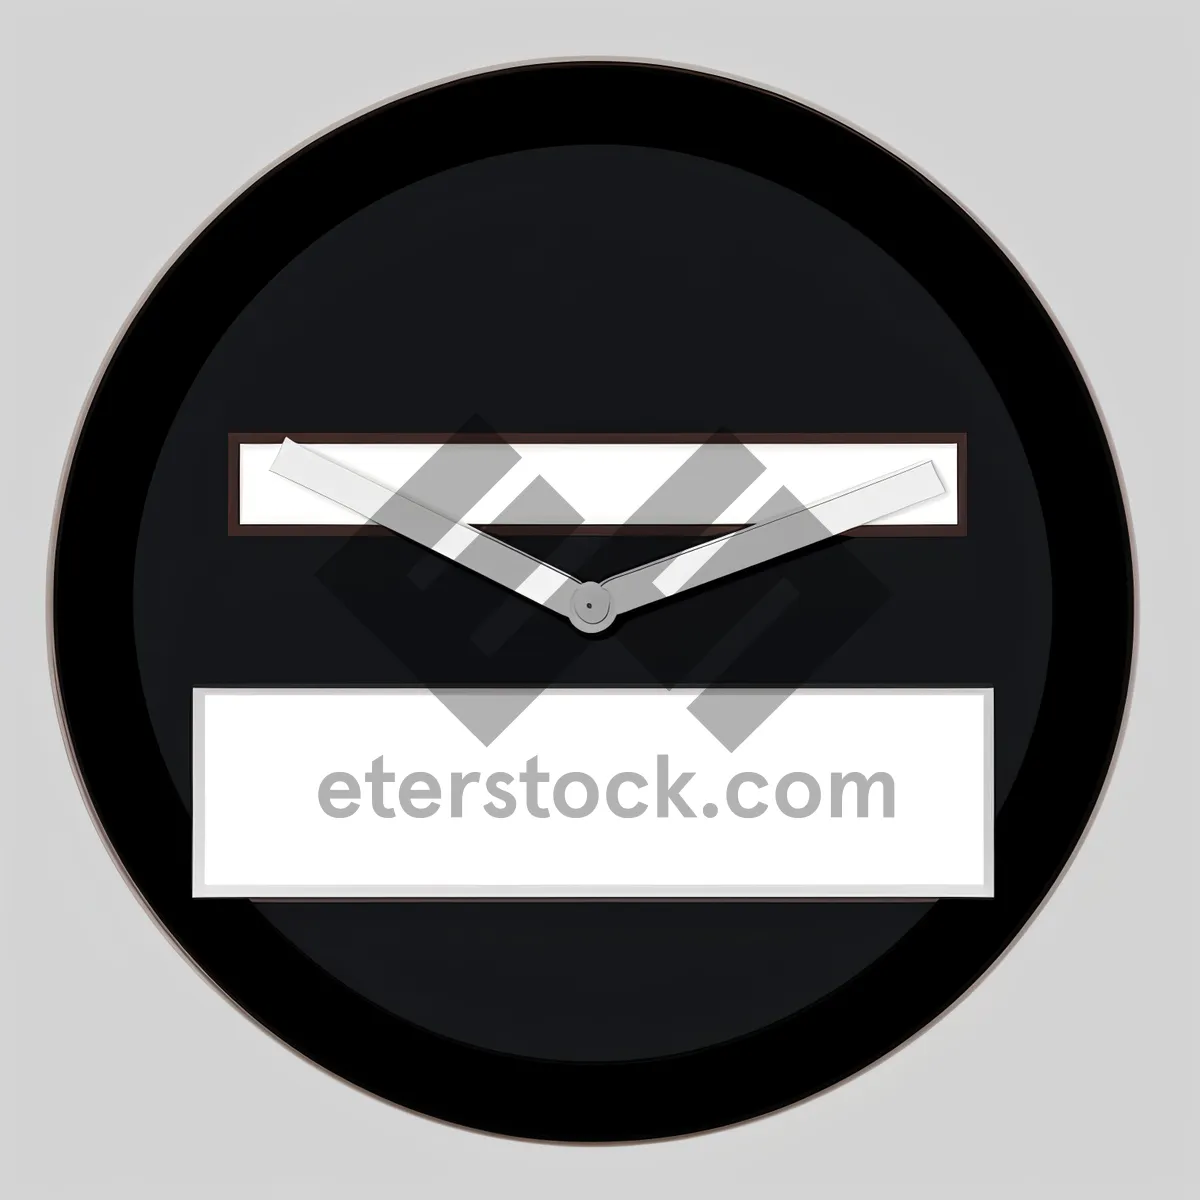 Picture of Web Button: Shiny Black Round Icon